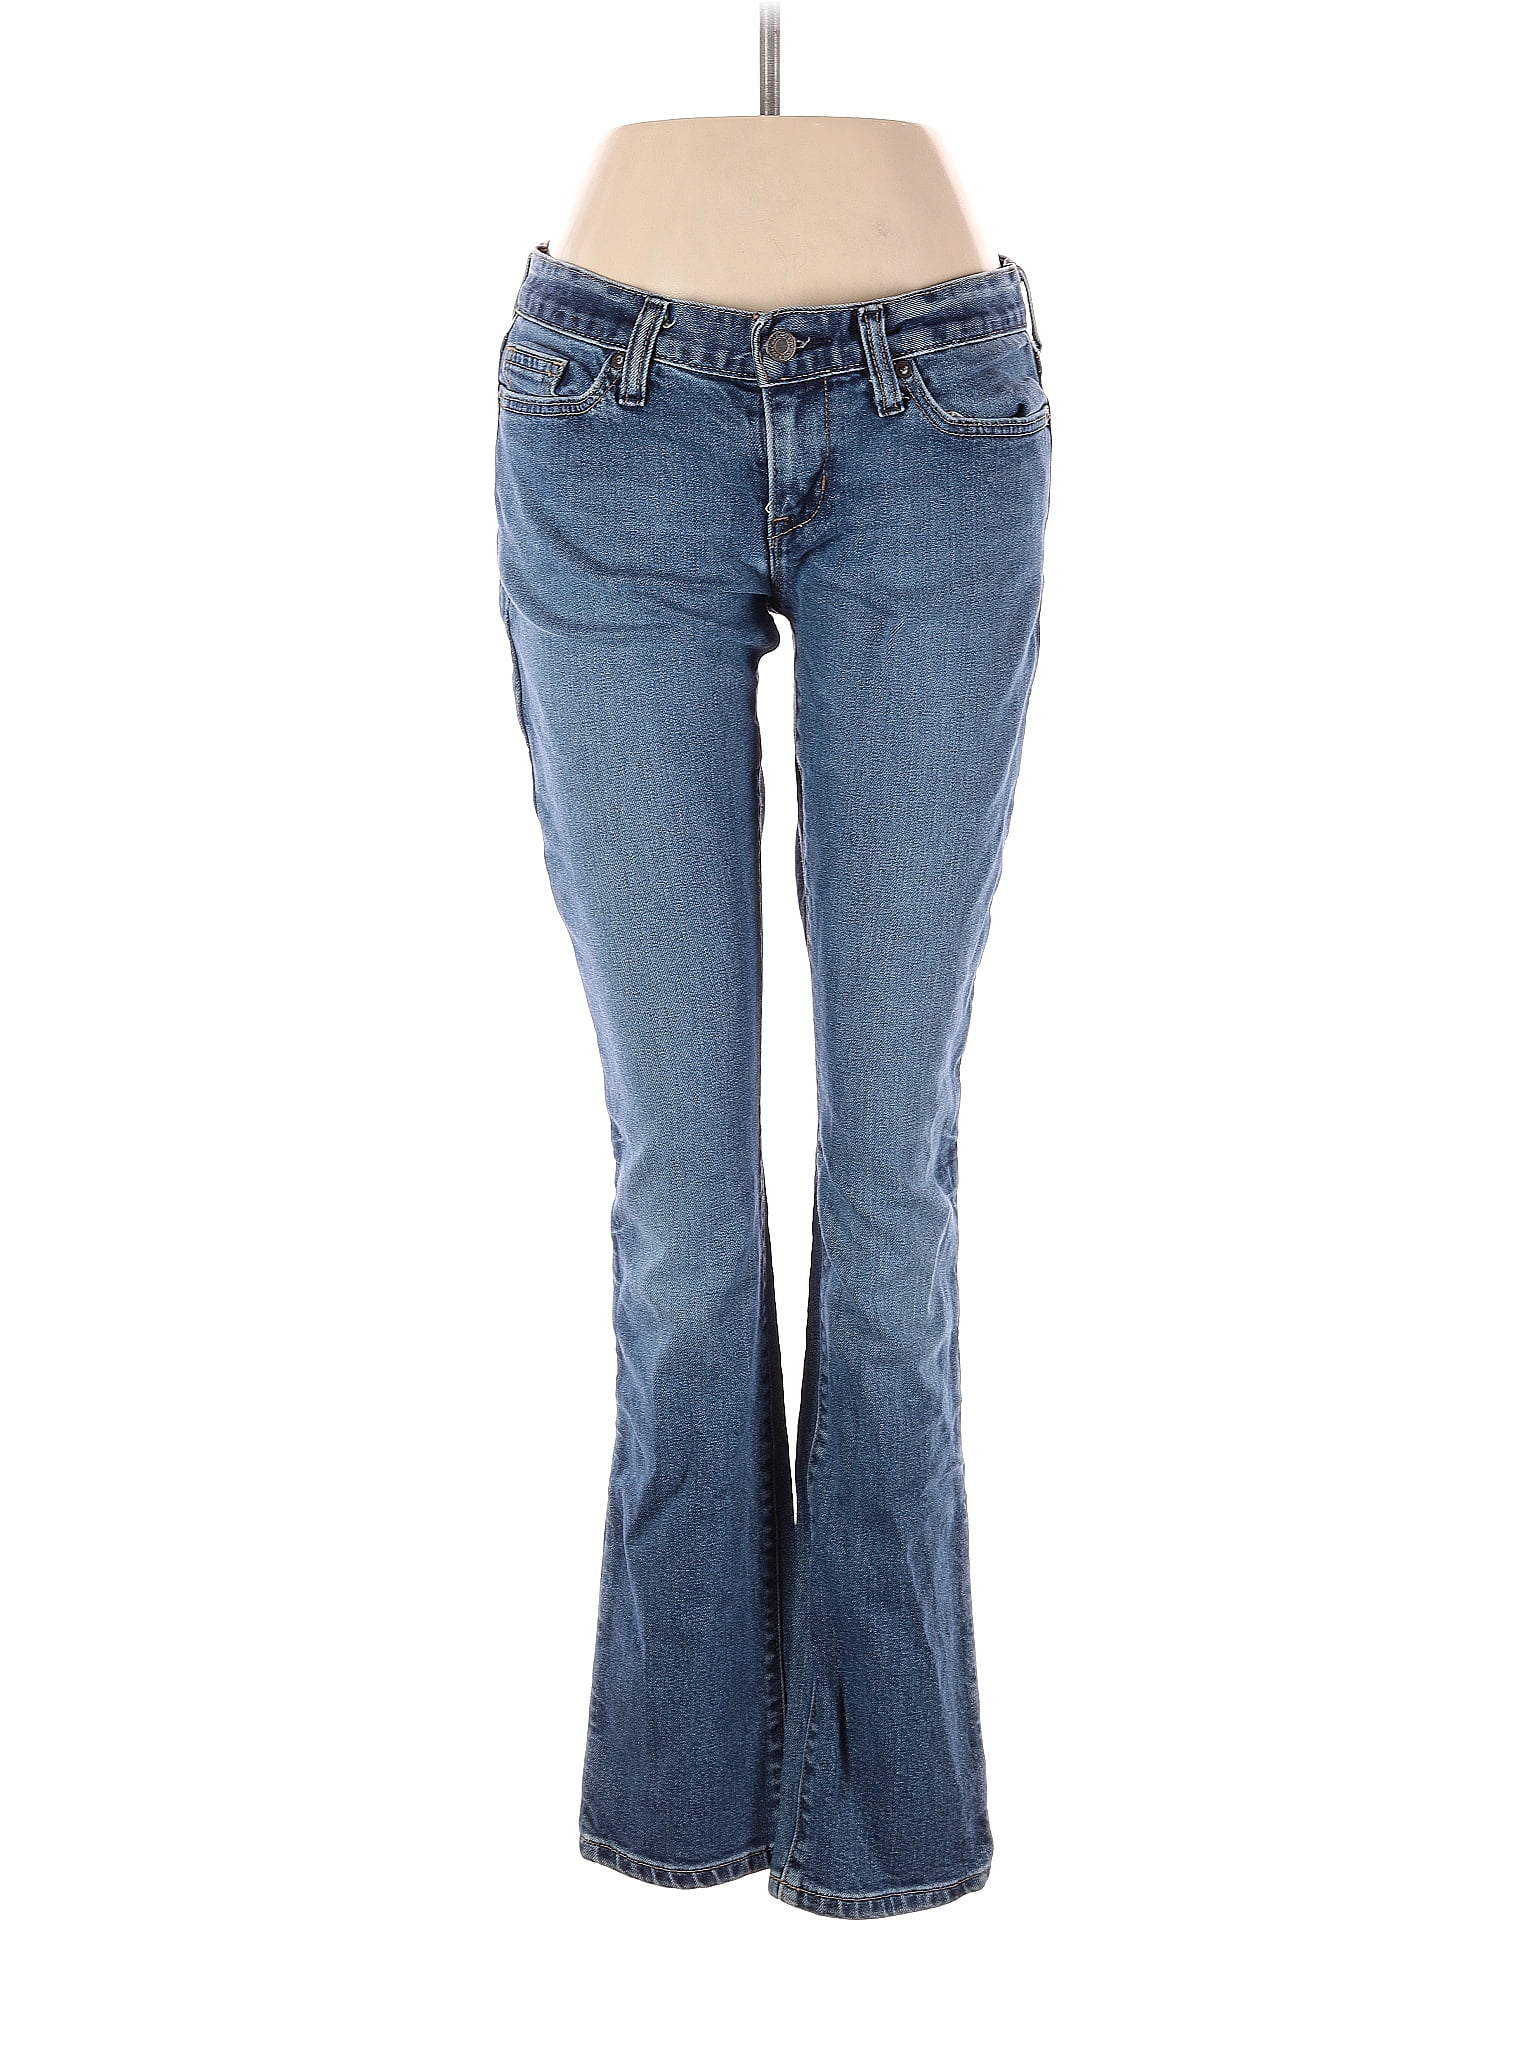 Gap Solid Blue Jeans Size 4 - 75% off | thredUP